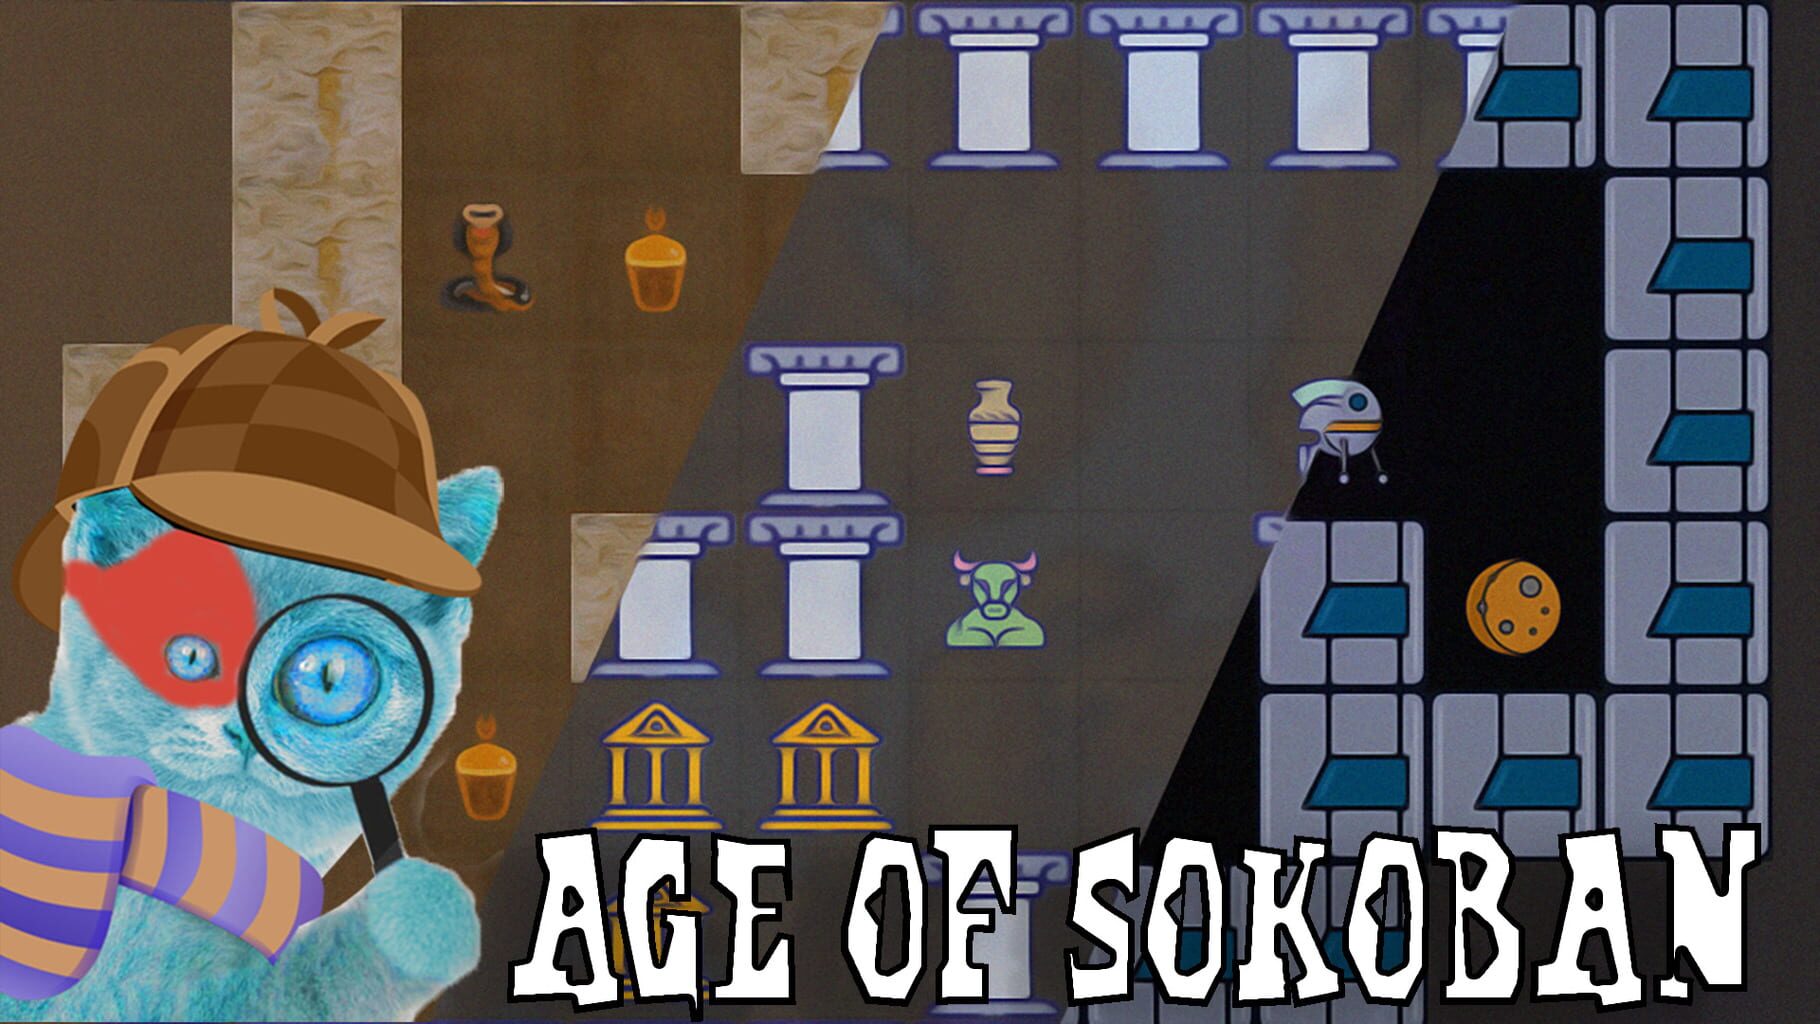 Age of Sokoban artwork